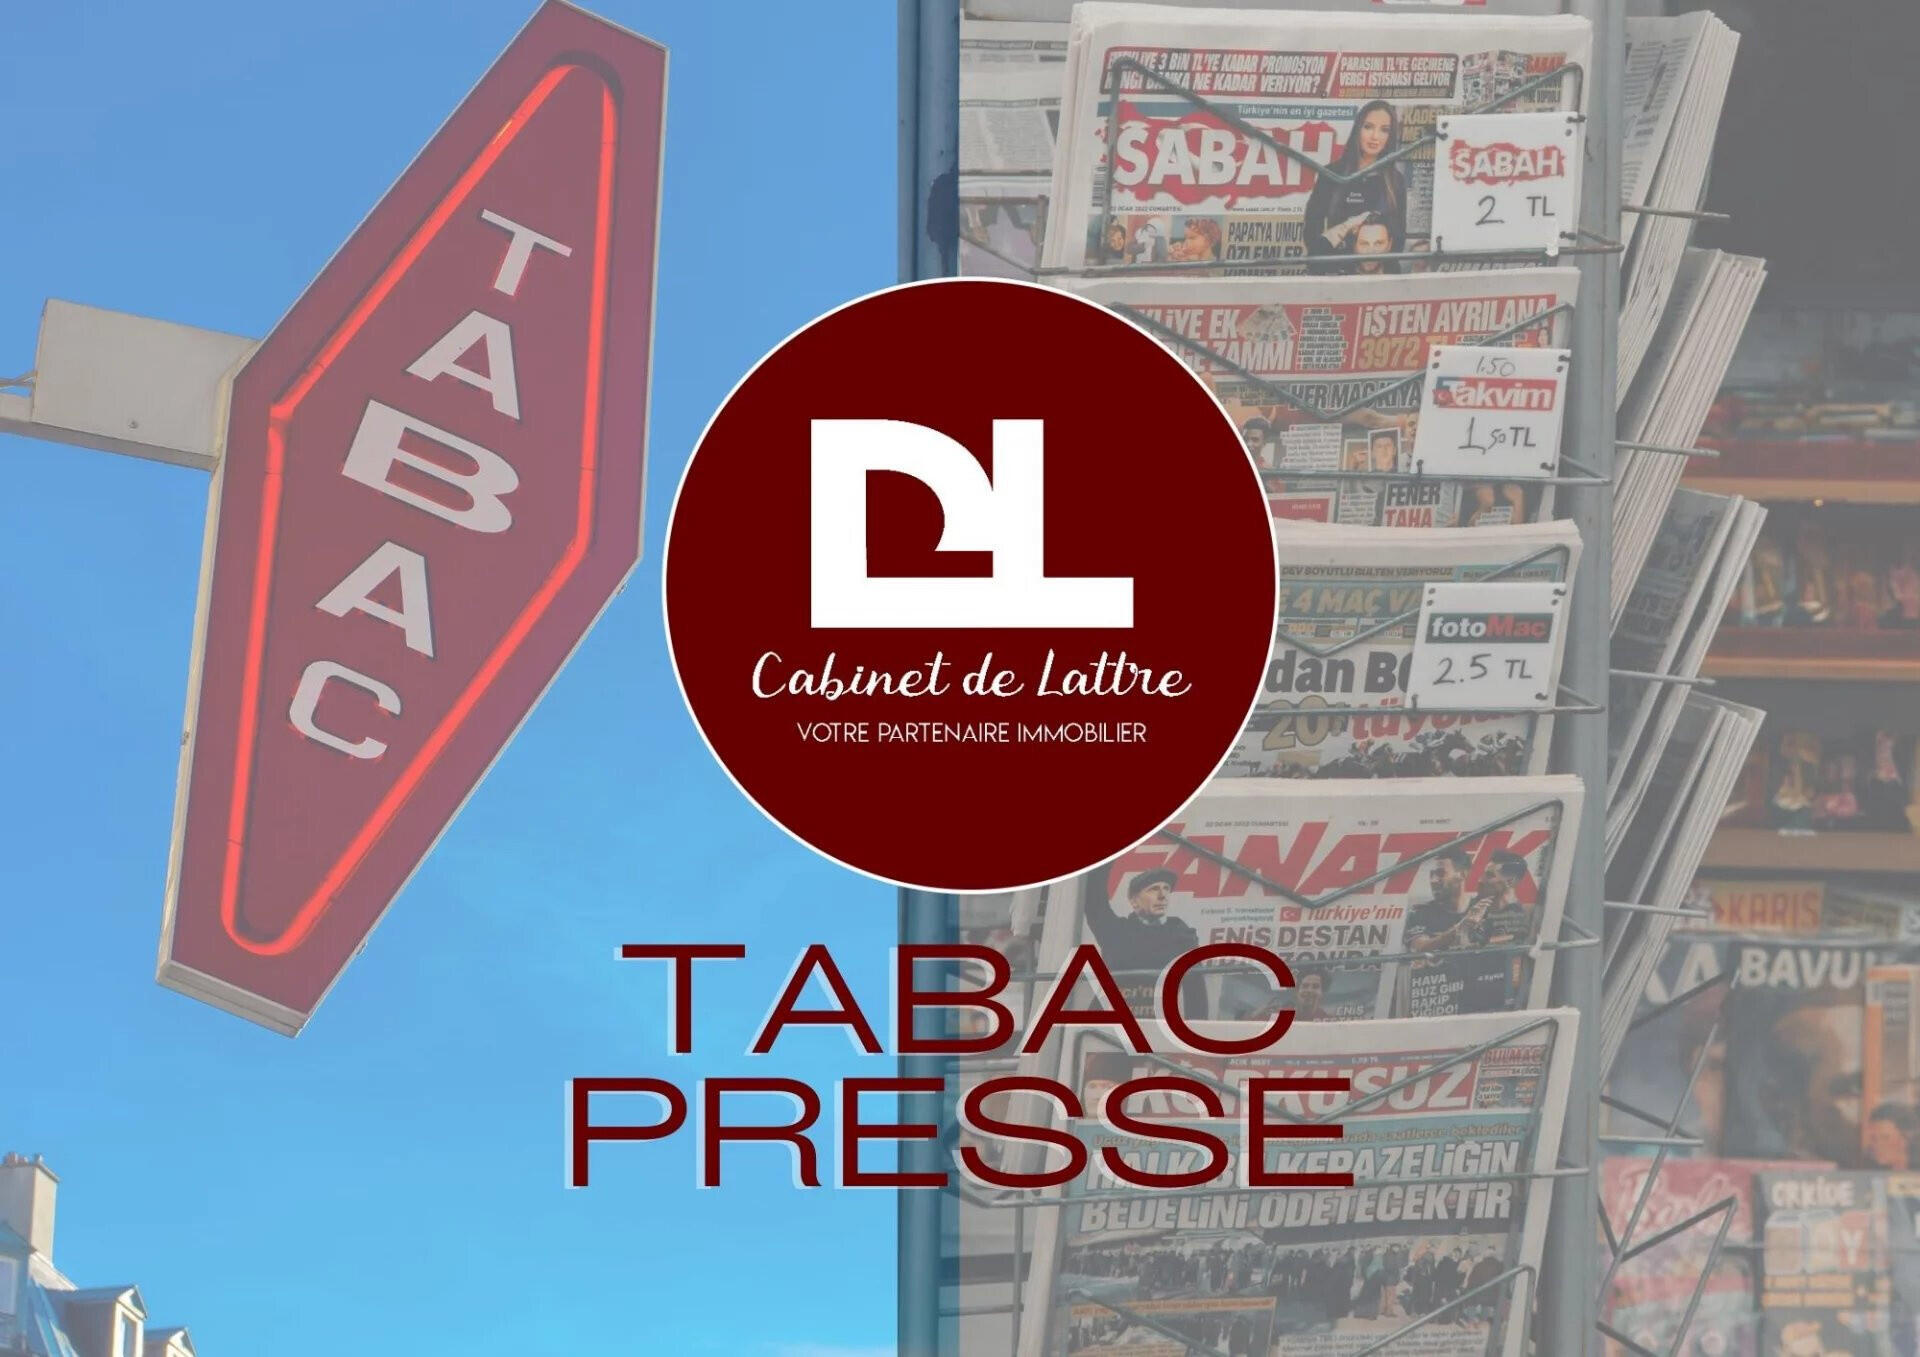 Vente Tabac Presse FDJ en agglo de Clermont-FD